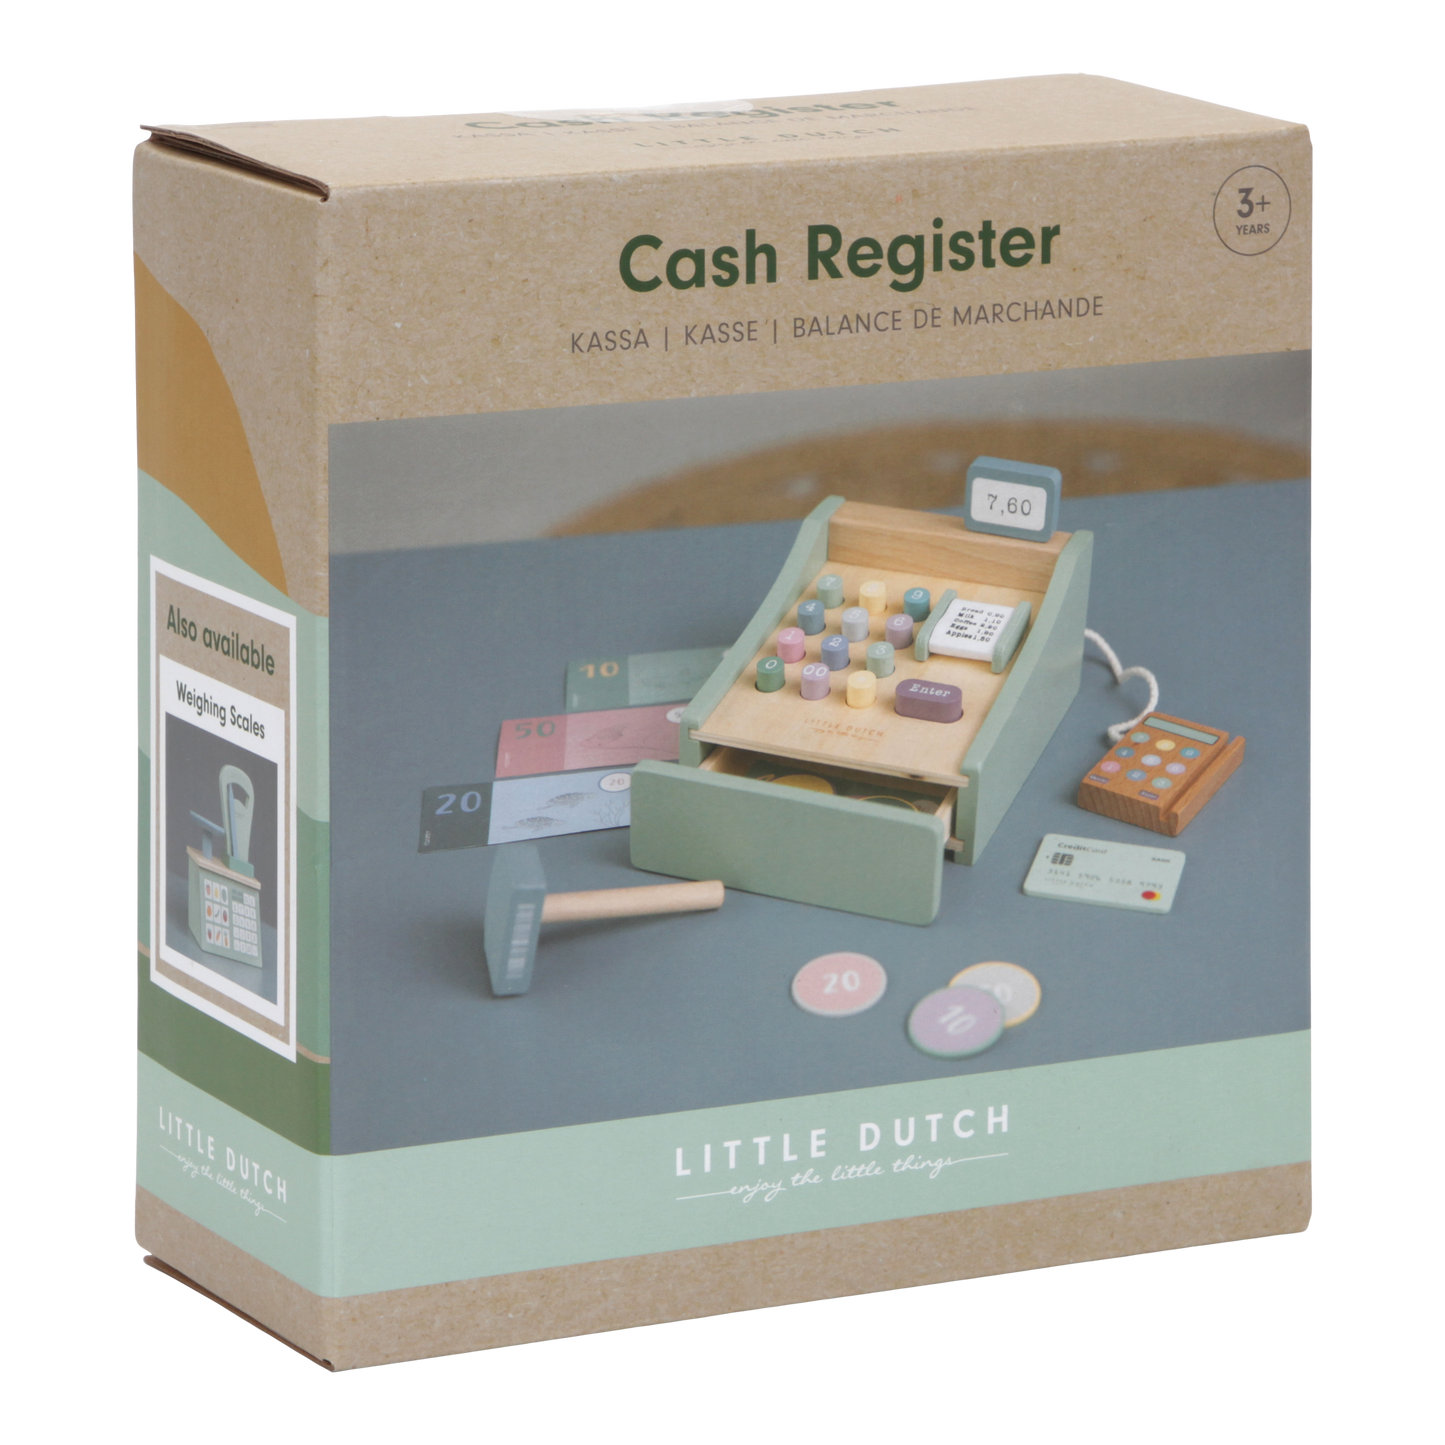 Little Dutch Wooden Toy Cash Register